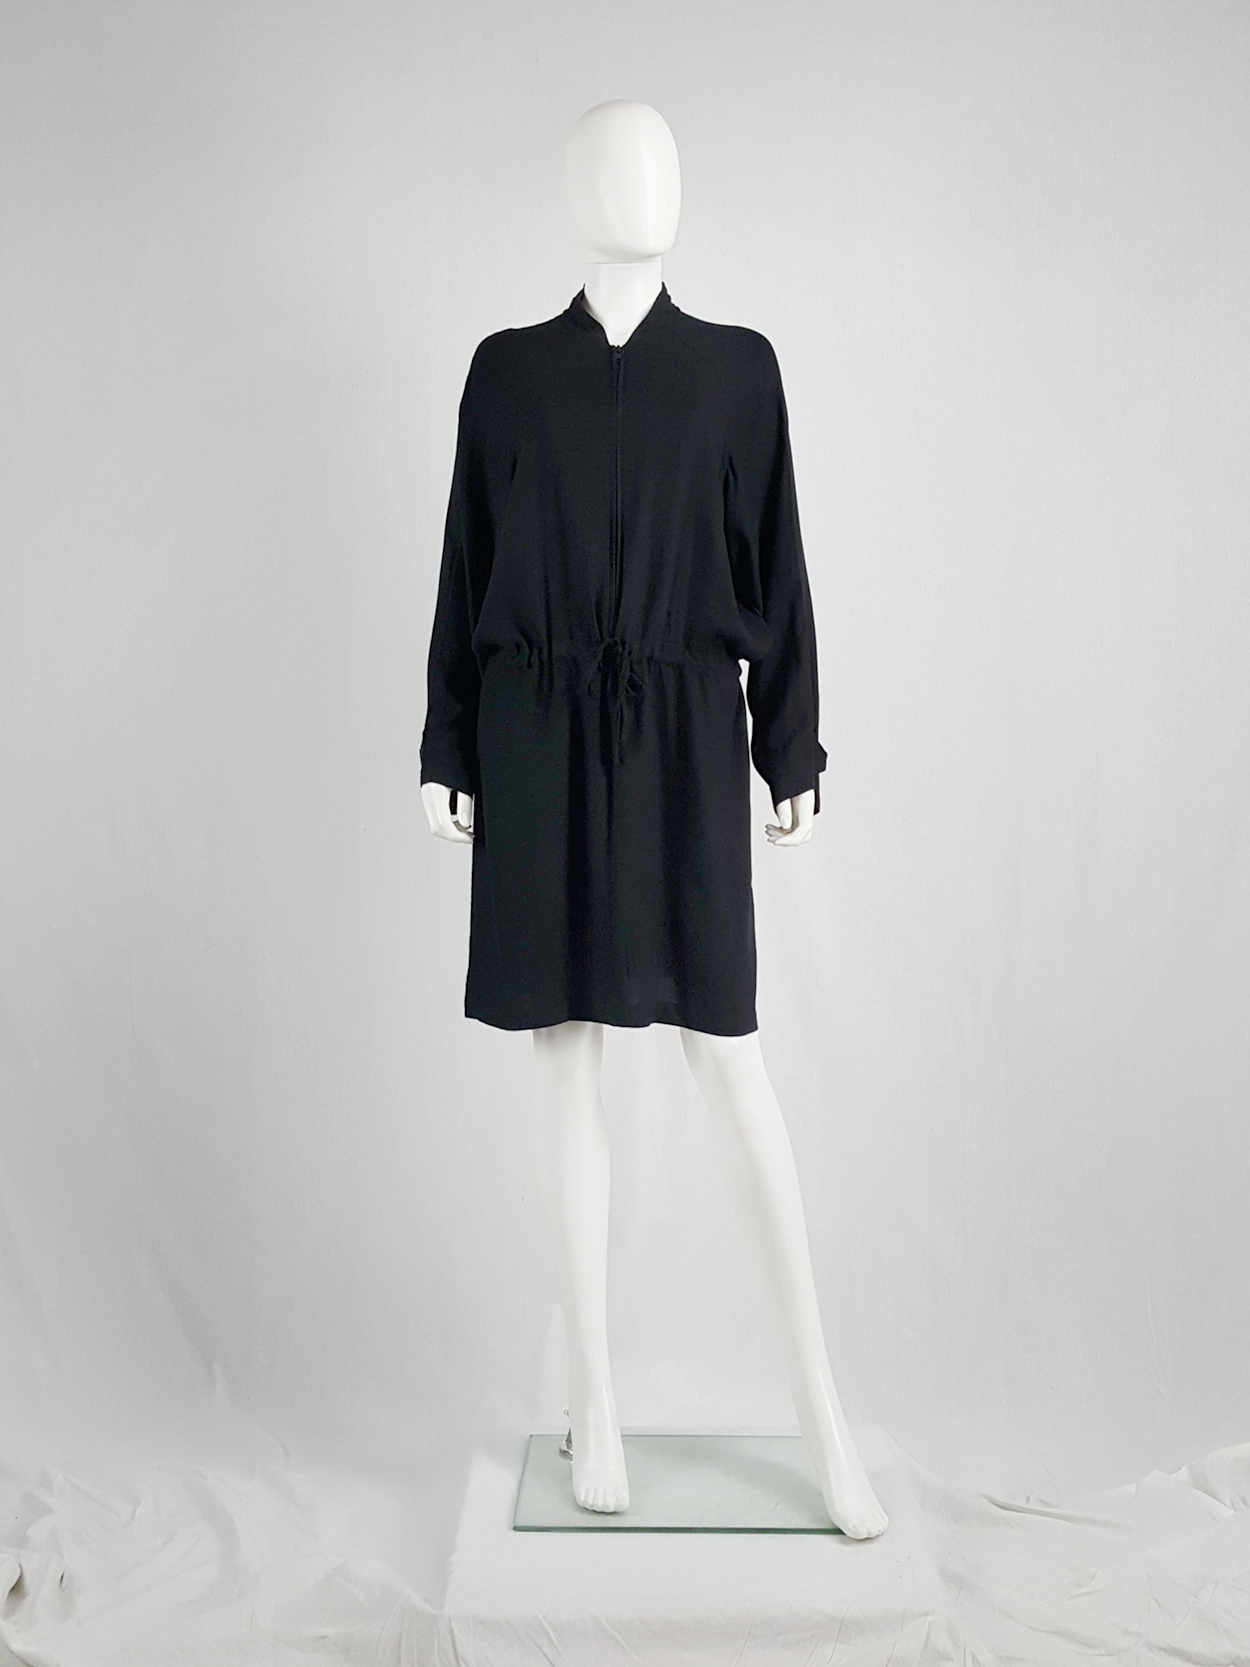 Ann Demeulemeester black bomber-style dress - V A N II T A S